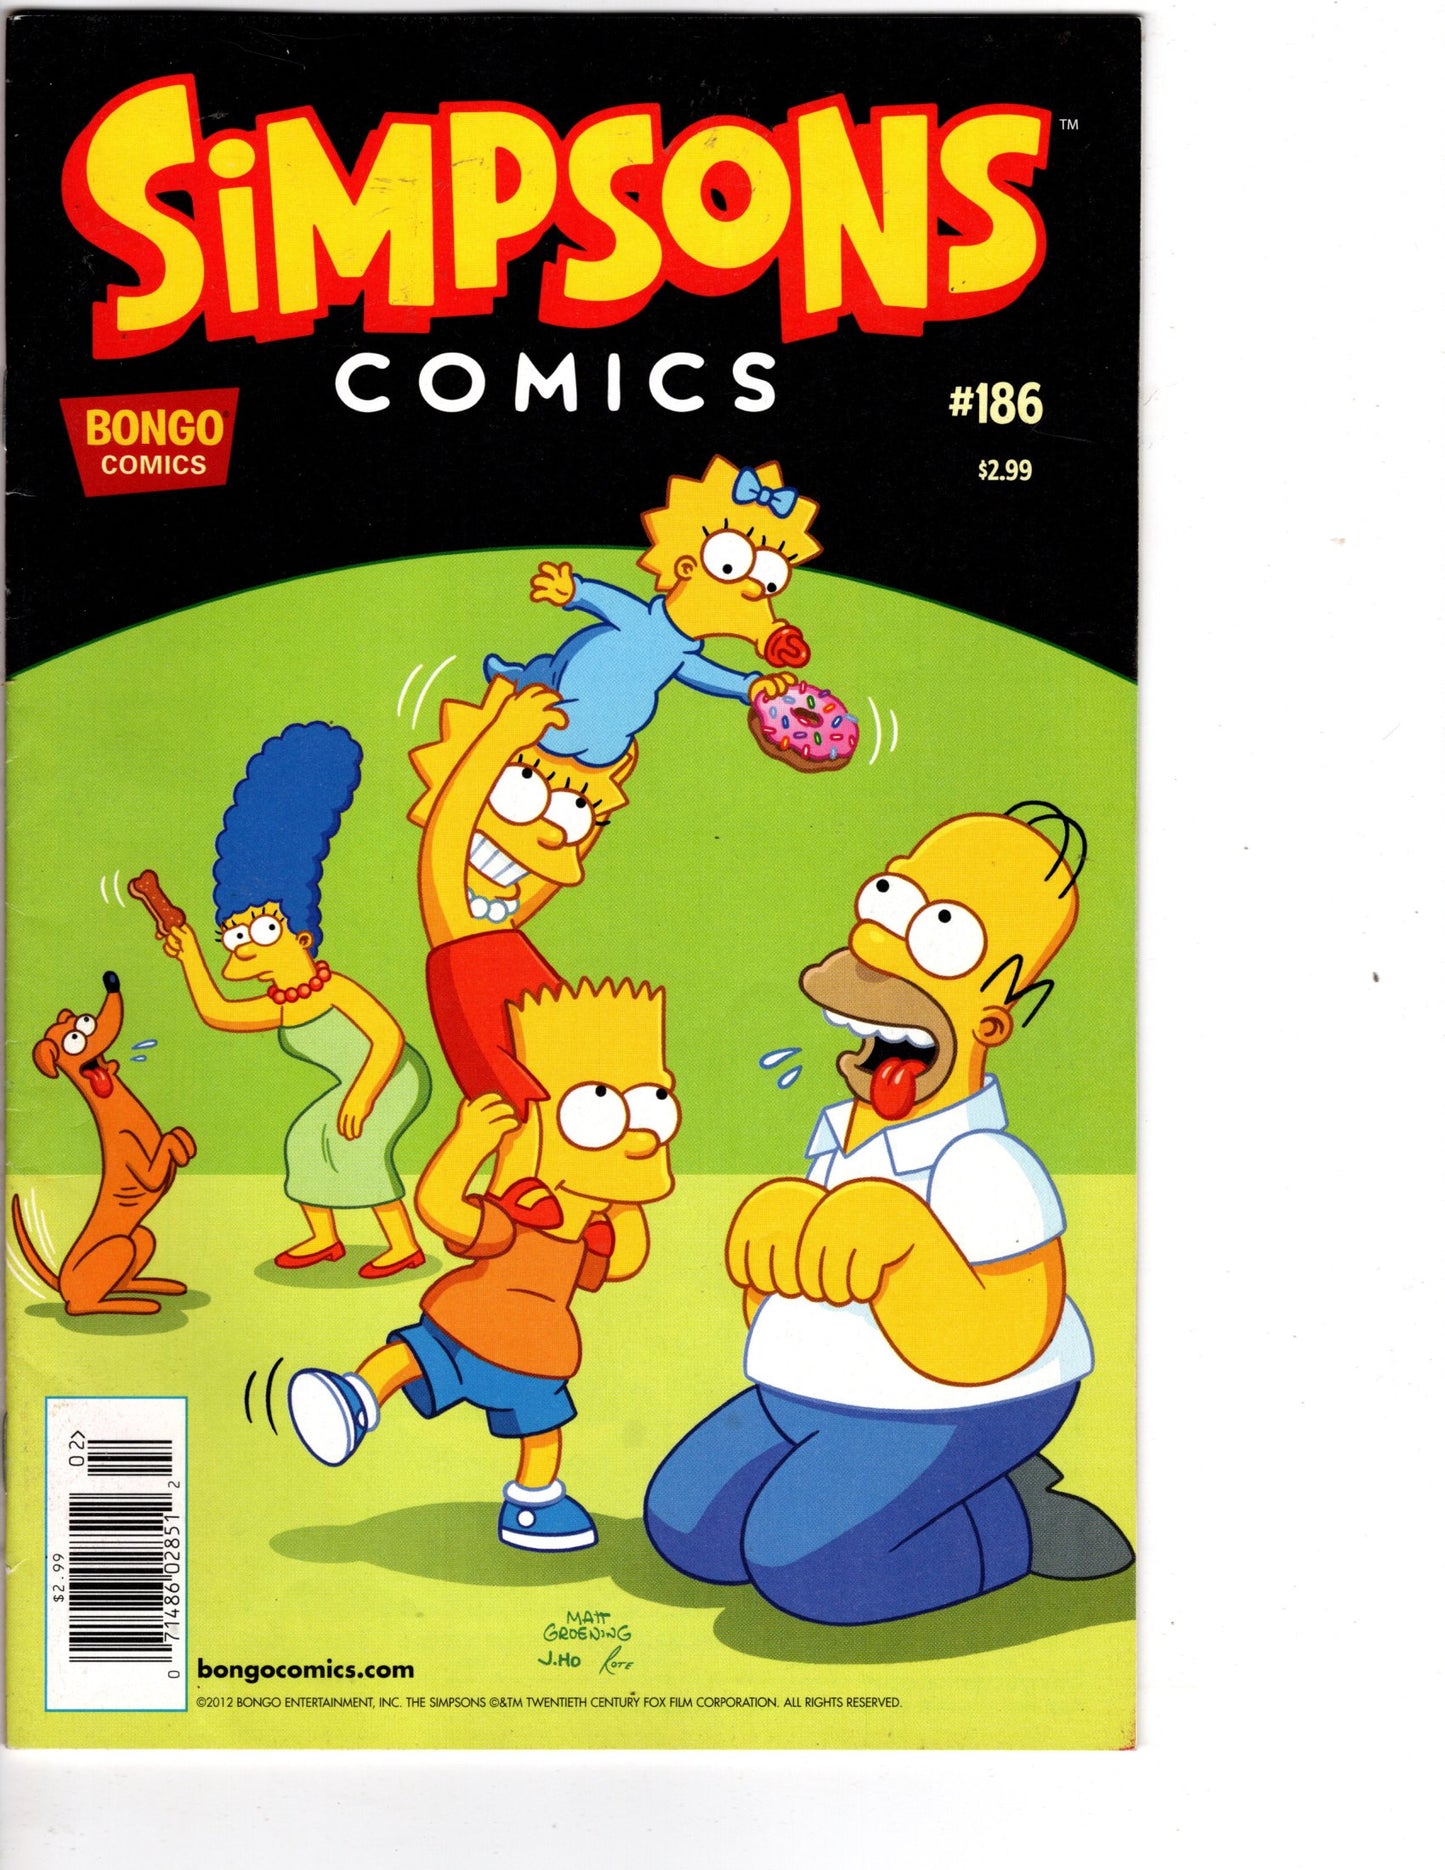 The Simpsons Comics #186